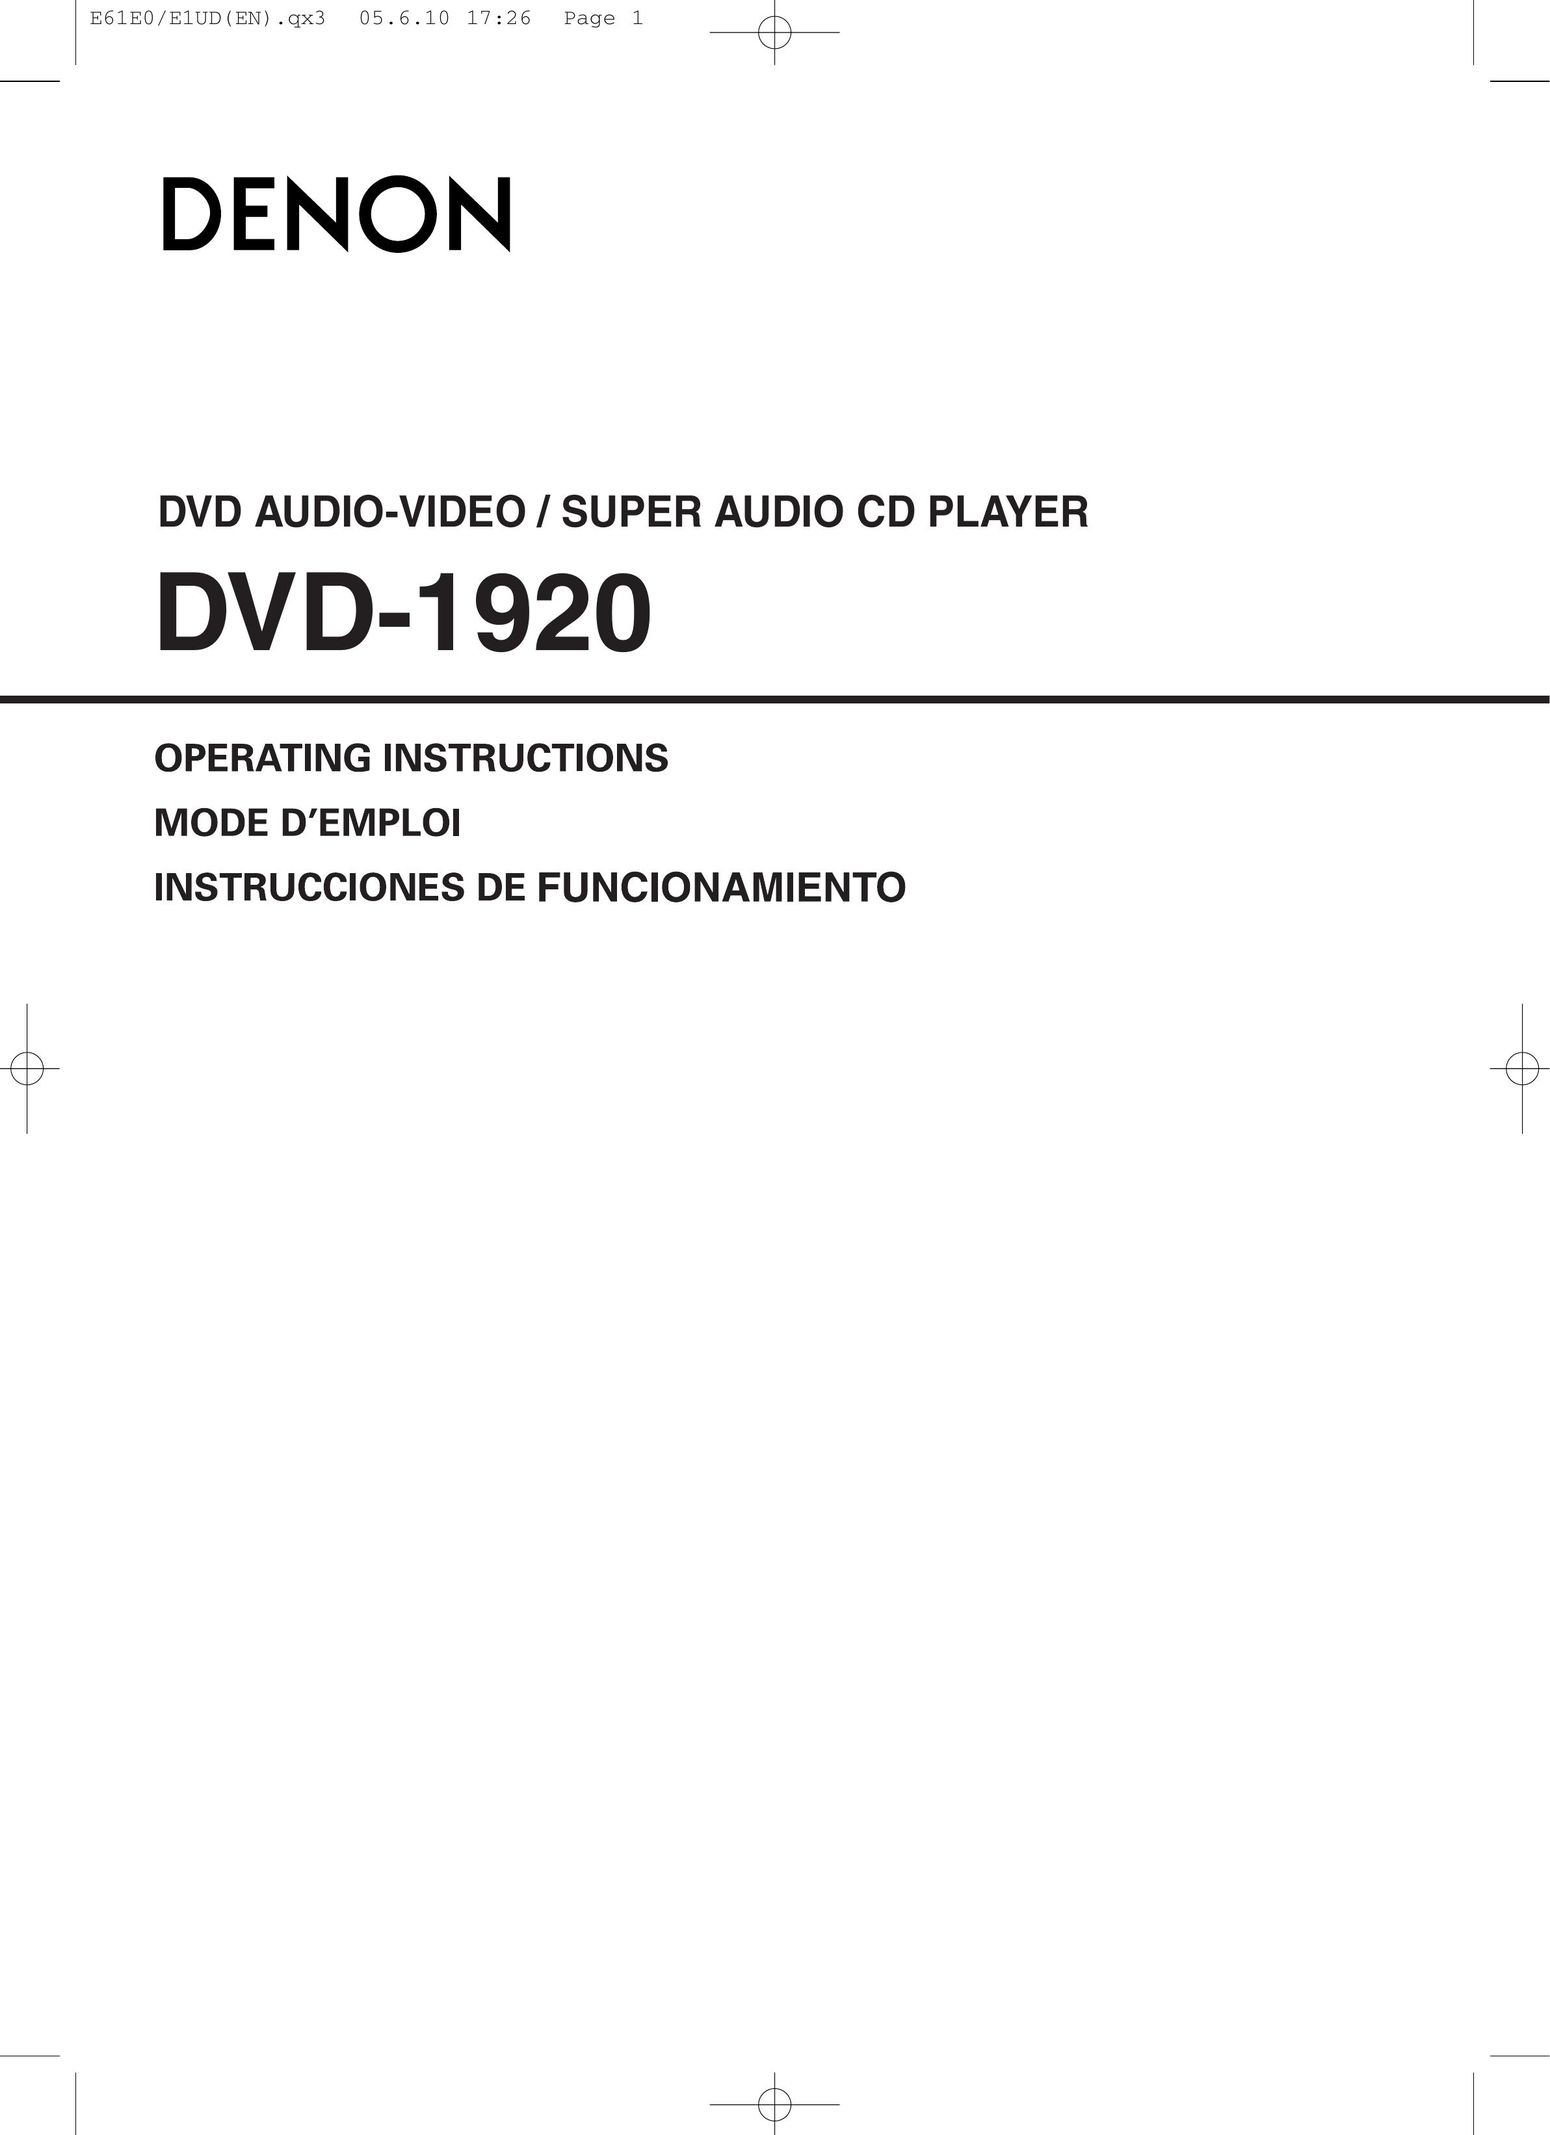 Denon DVD-1920 DVD Player User Manual